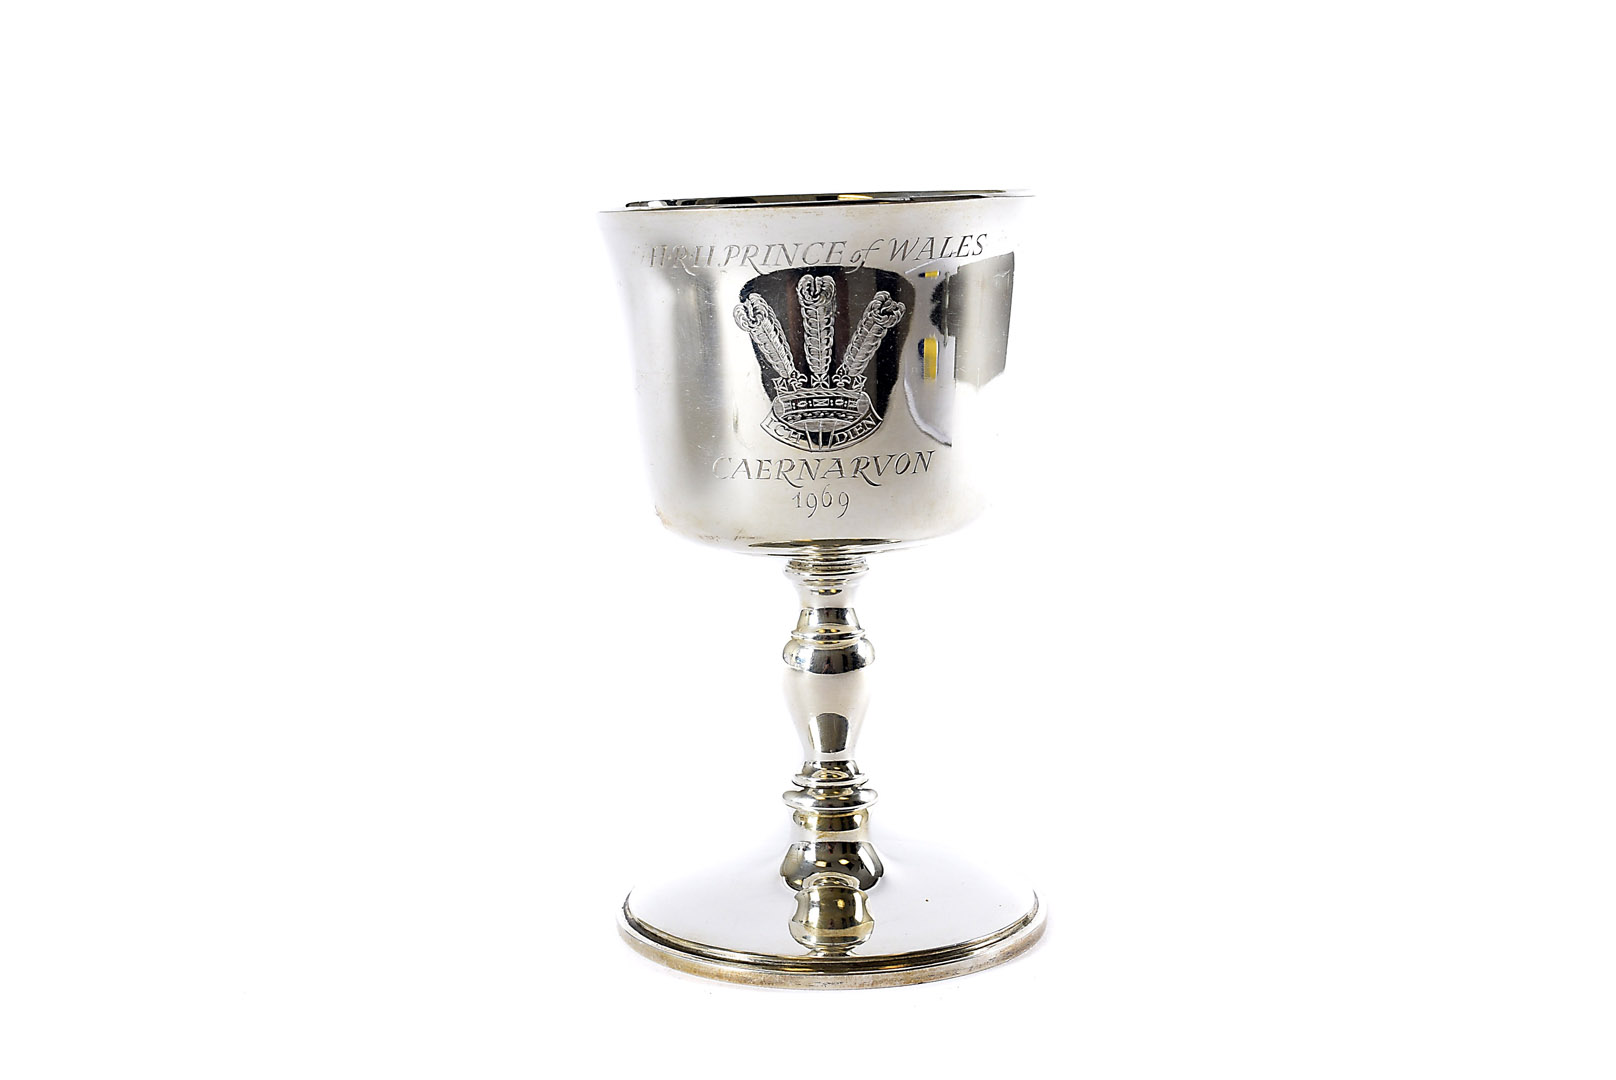 A 1960s silver commemorative goblet, celebrating the Prince of Wales Caernarvon 1969, 10.9 ozt